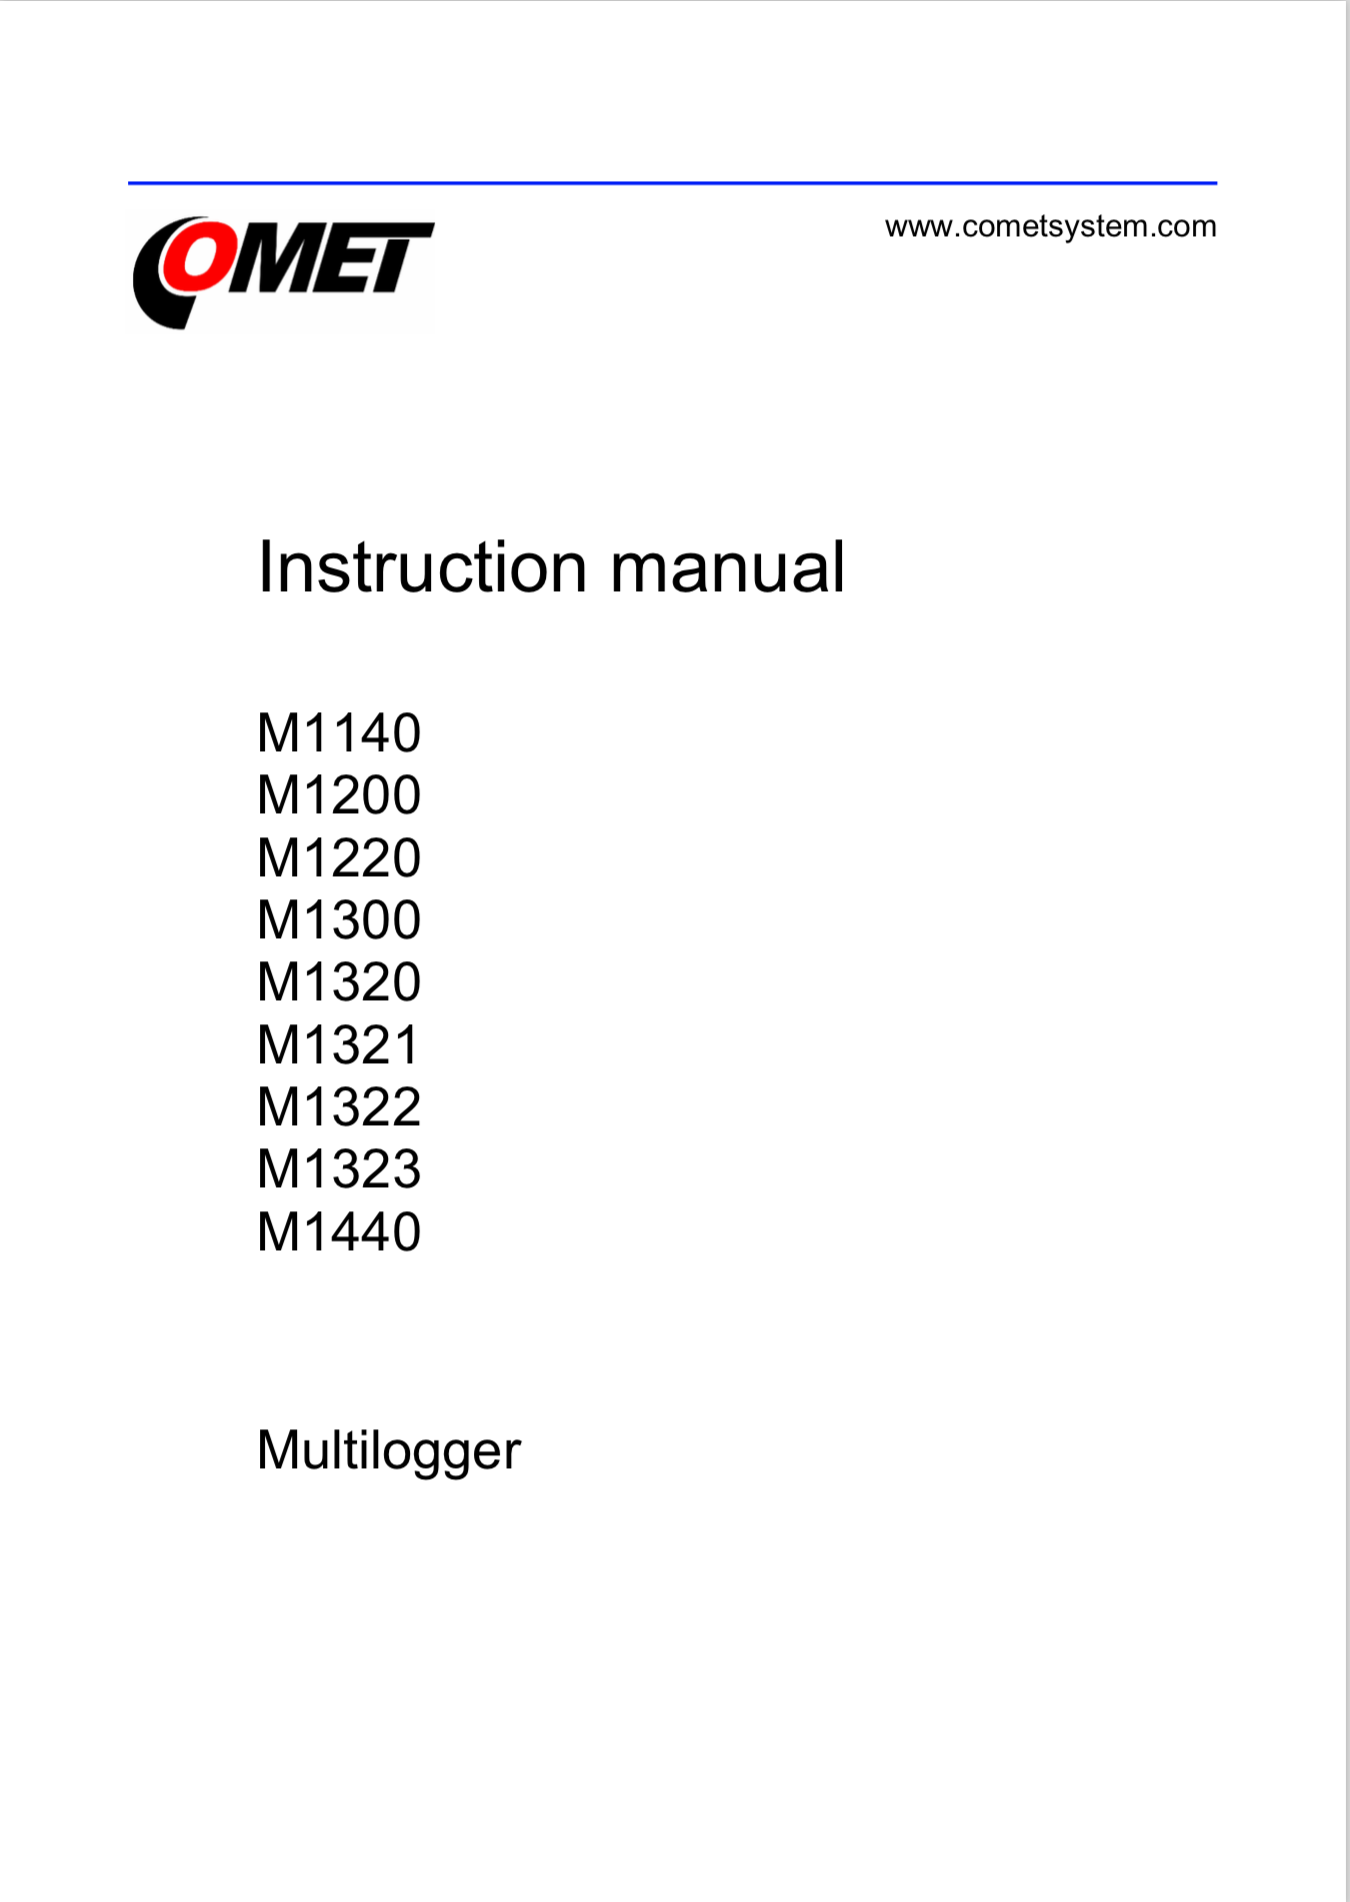 Comet Multilogger Instruction Manual